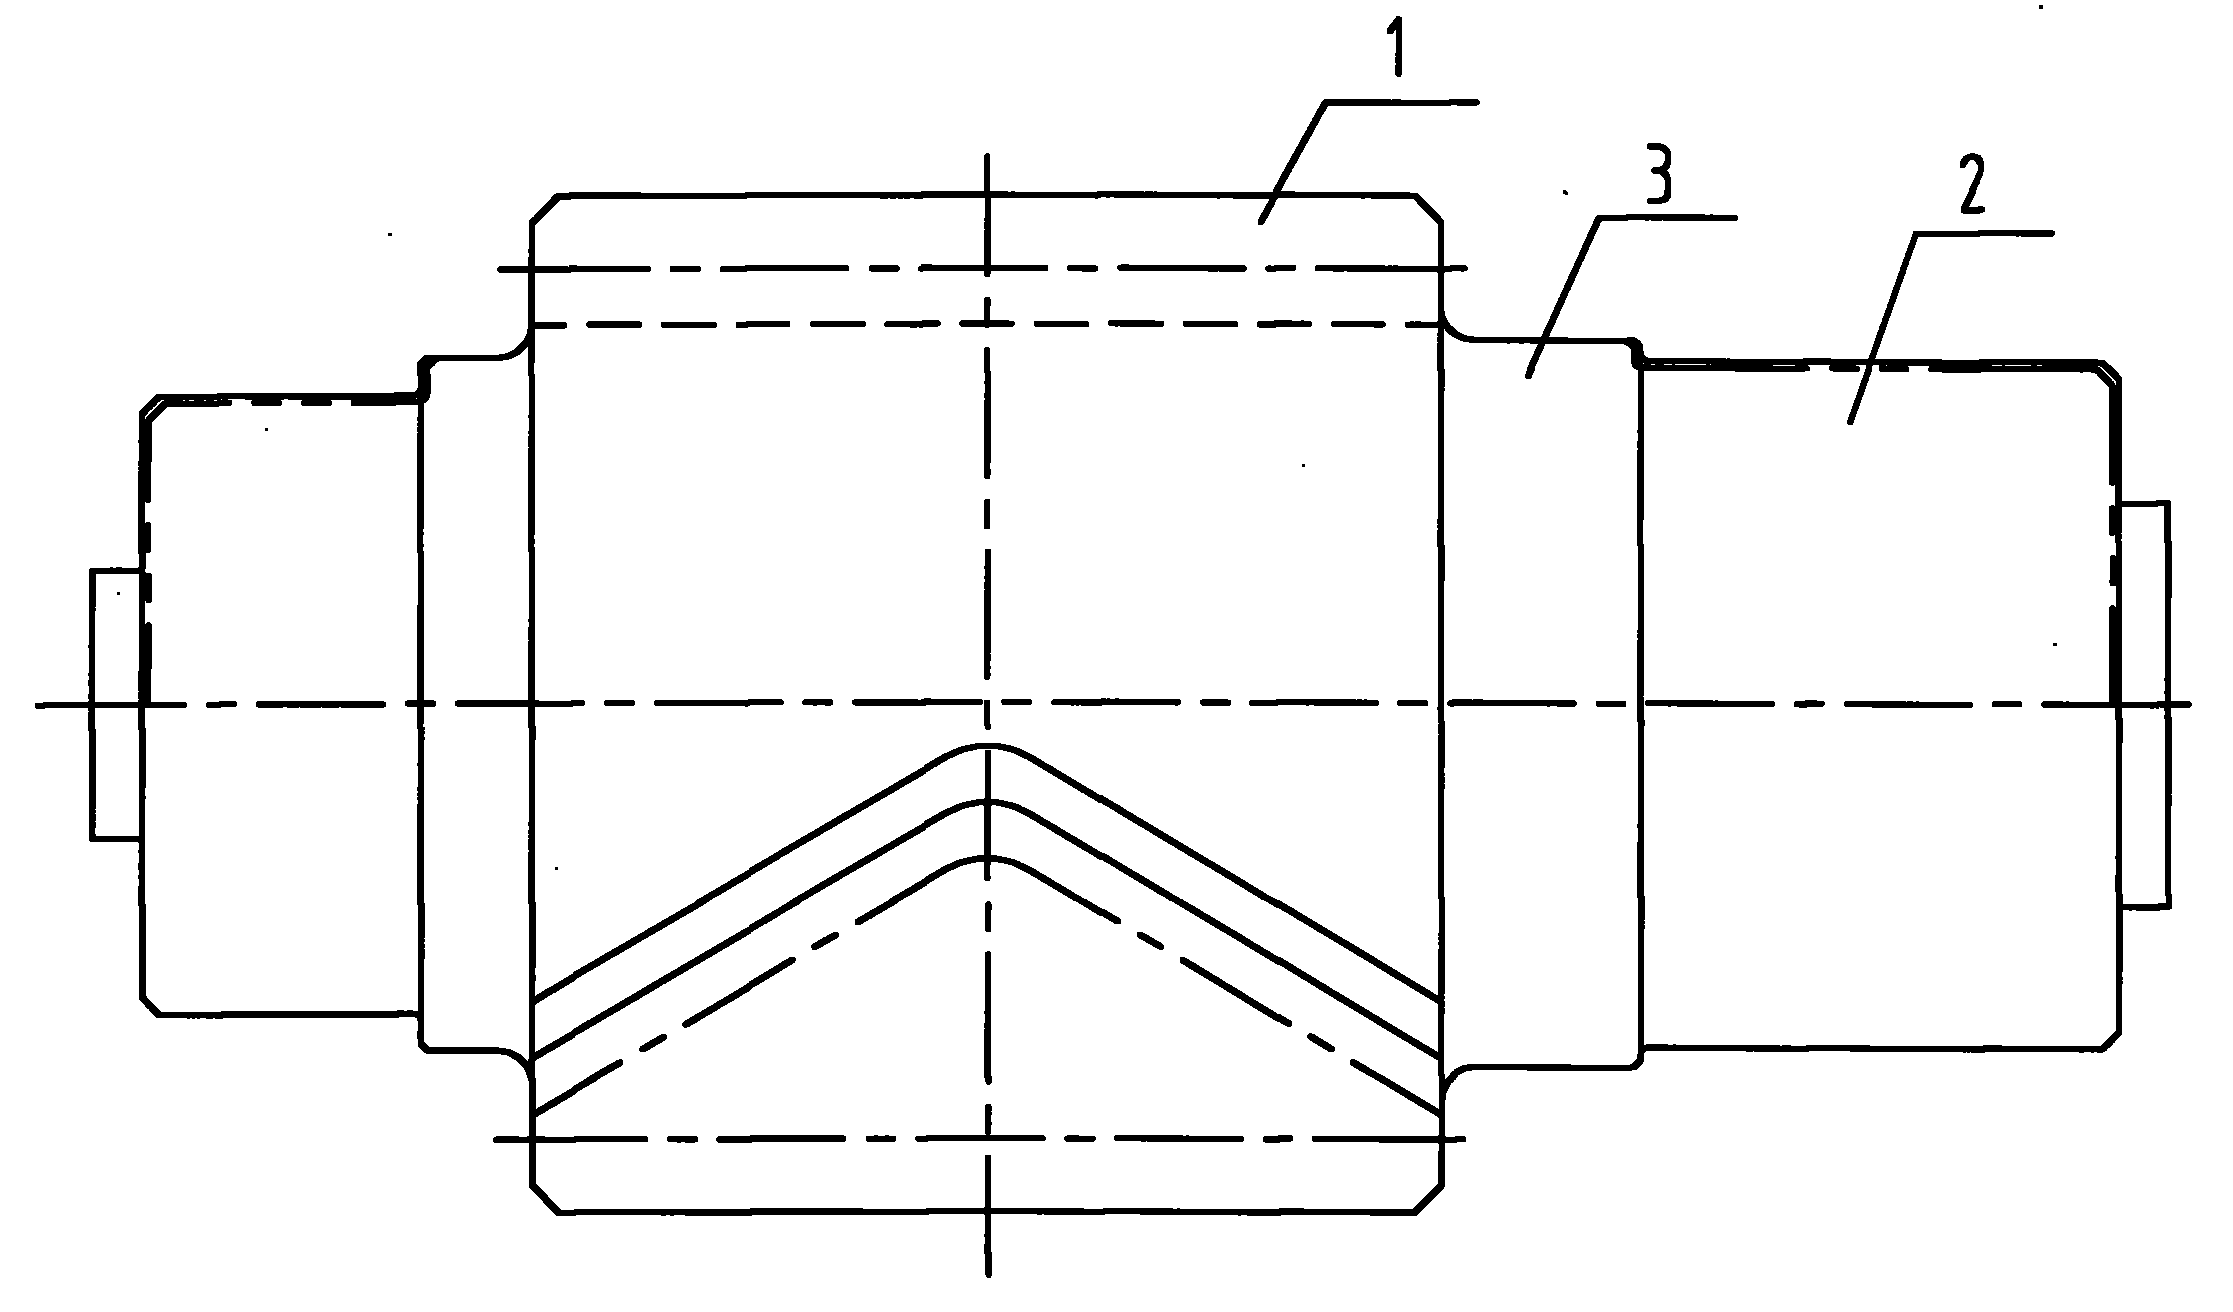 Manufacturing method of integral herringbone gear shaft